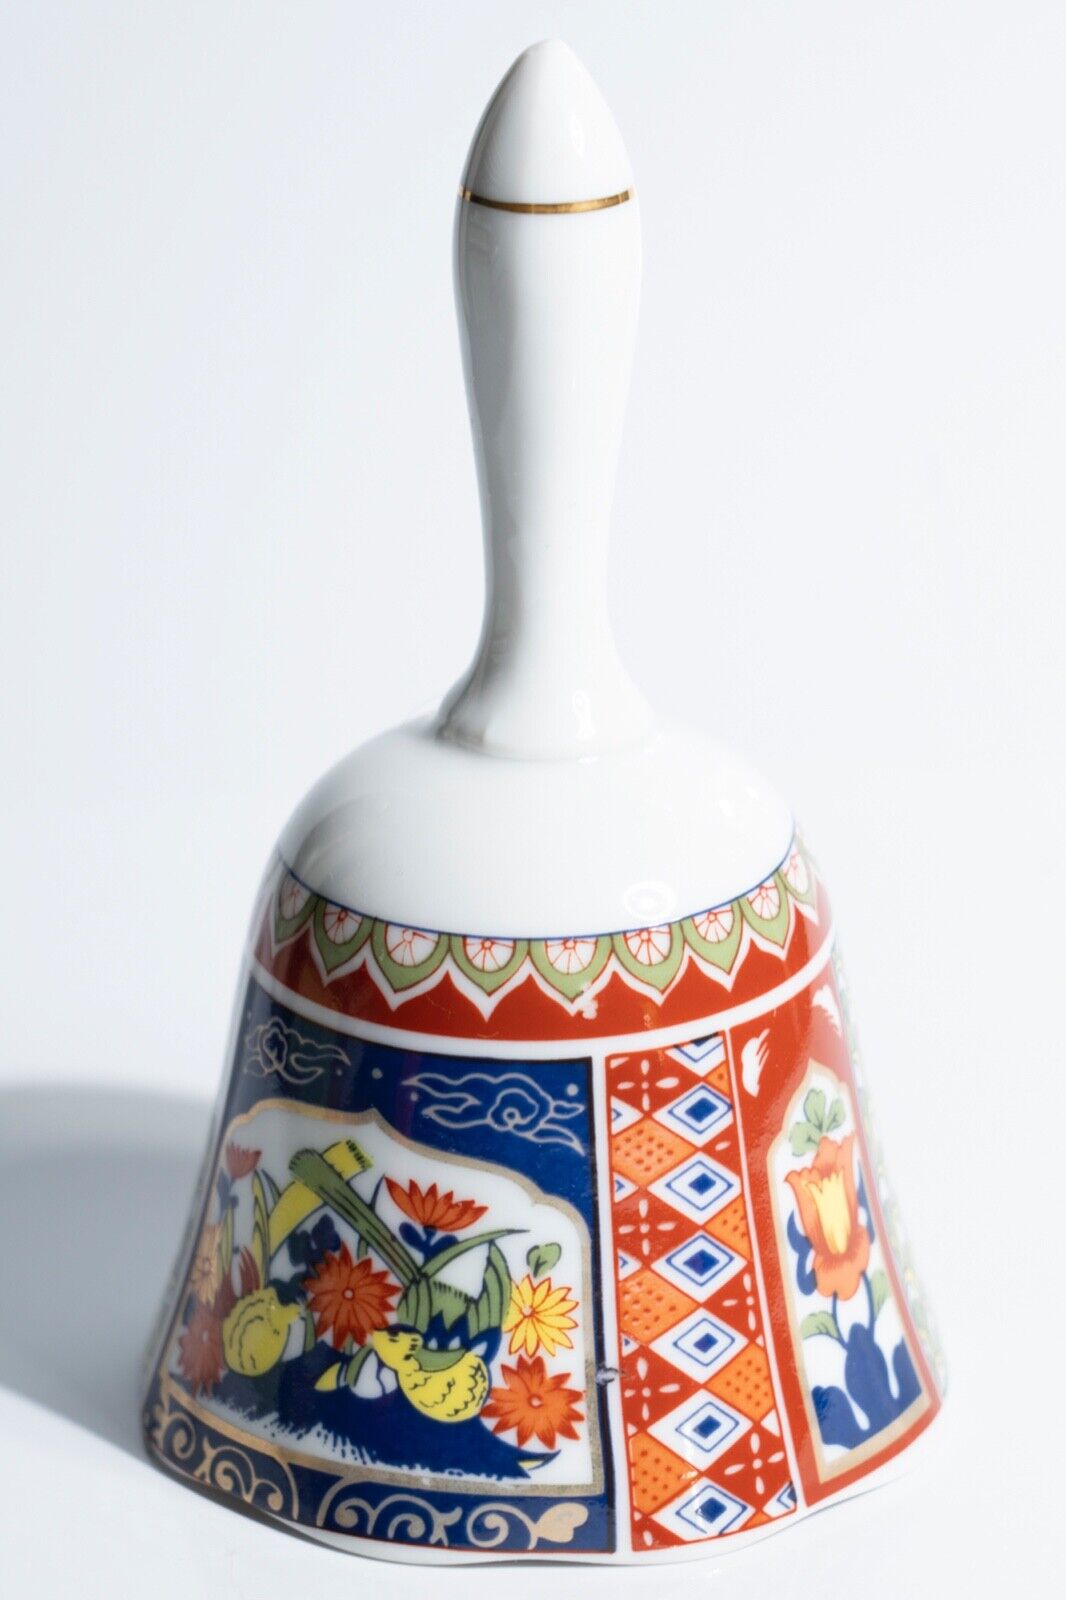 Vintage Porcelain Bell With Oriental Flower Pattern Made in Japan Wavy Edge